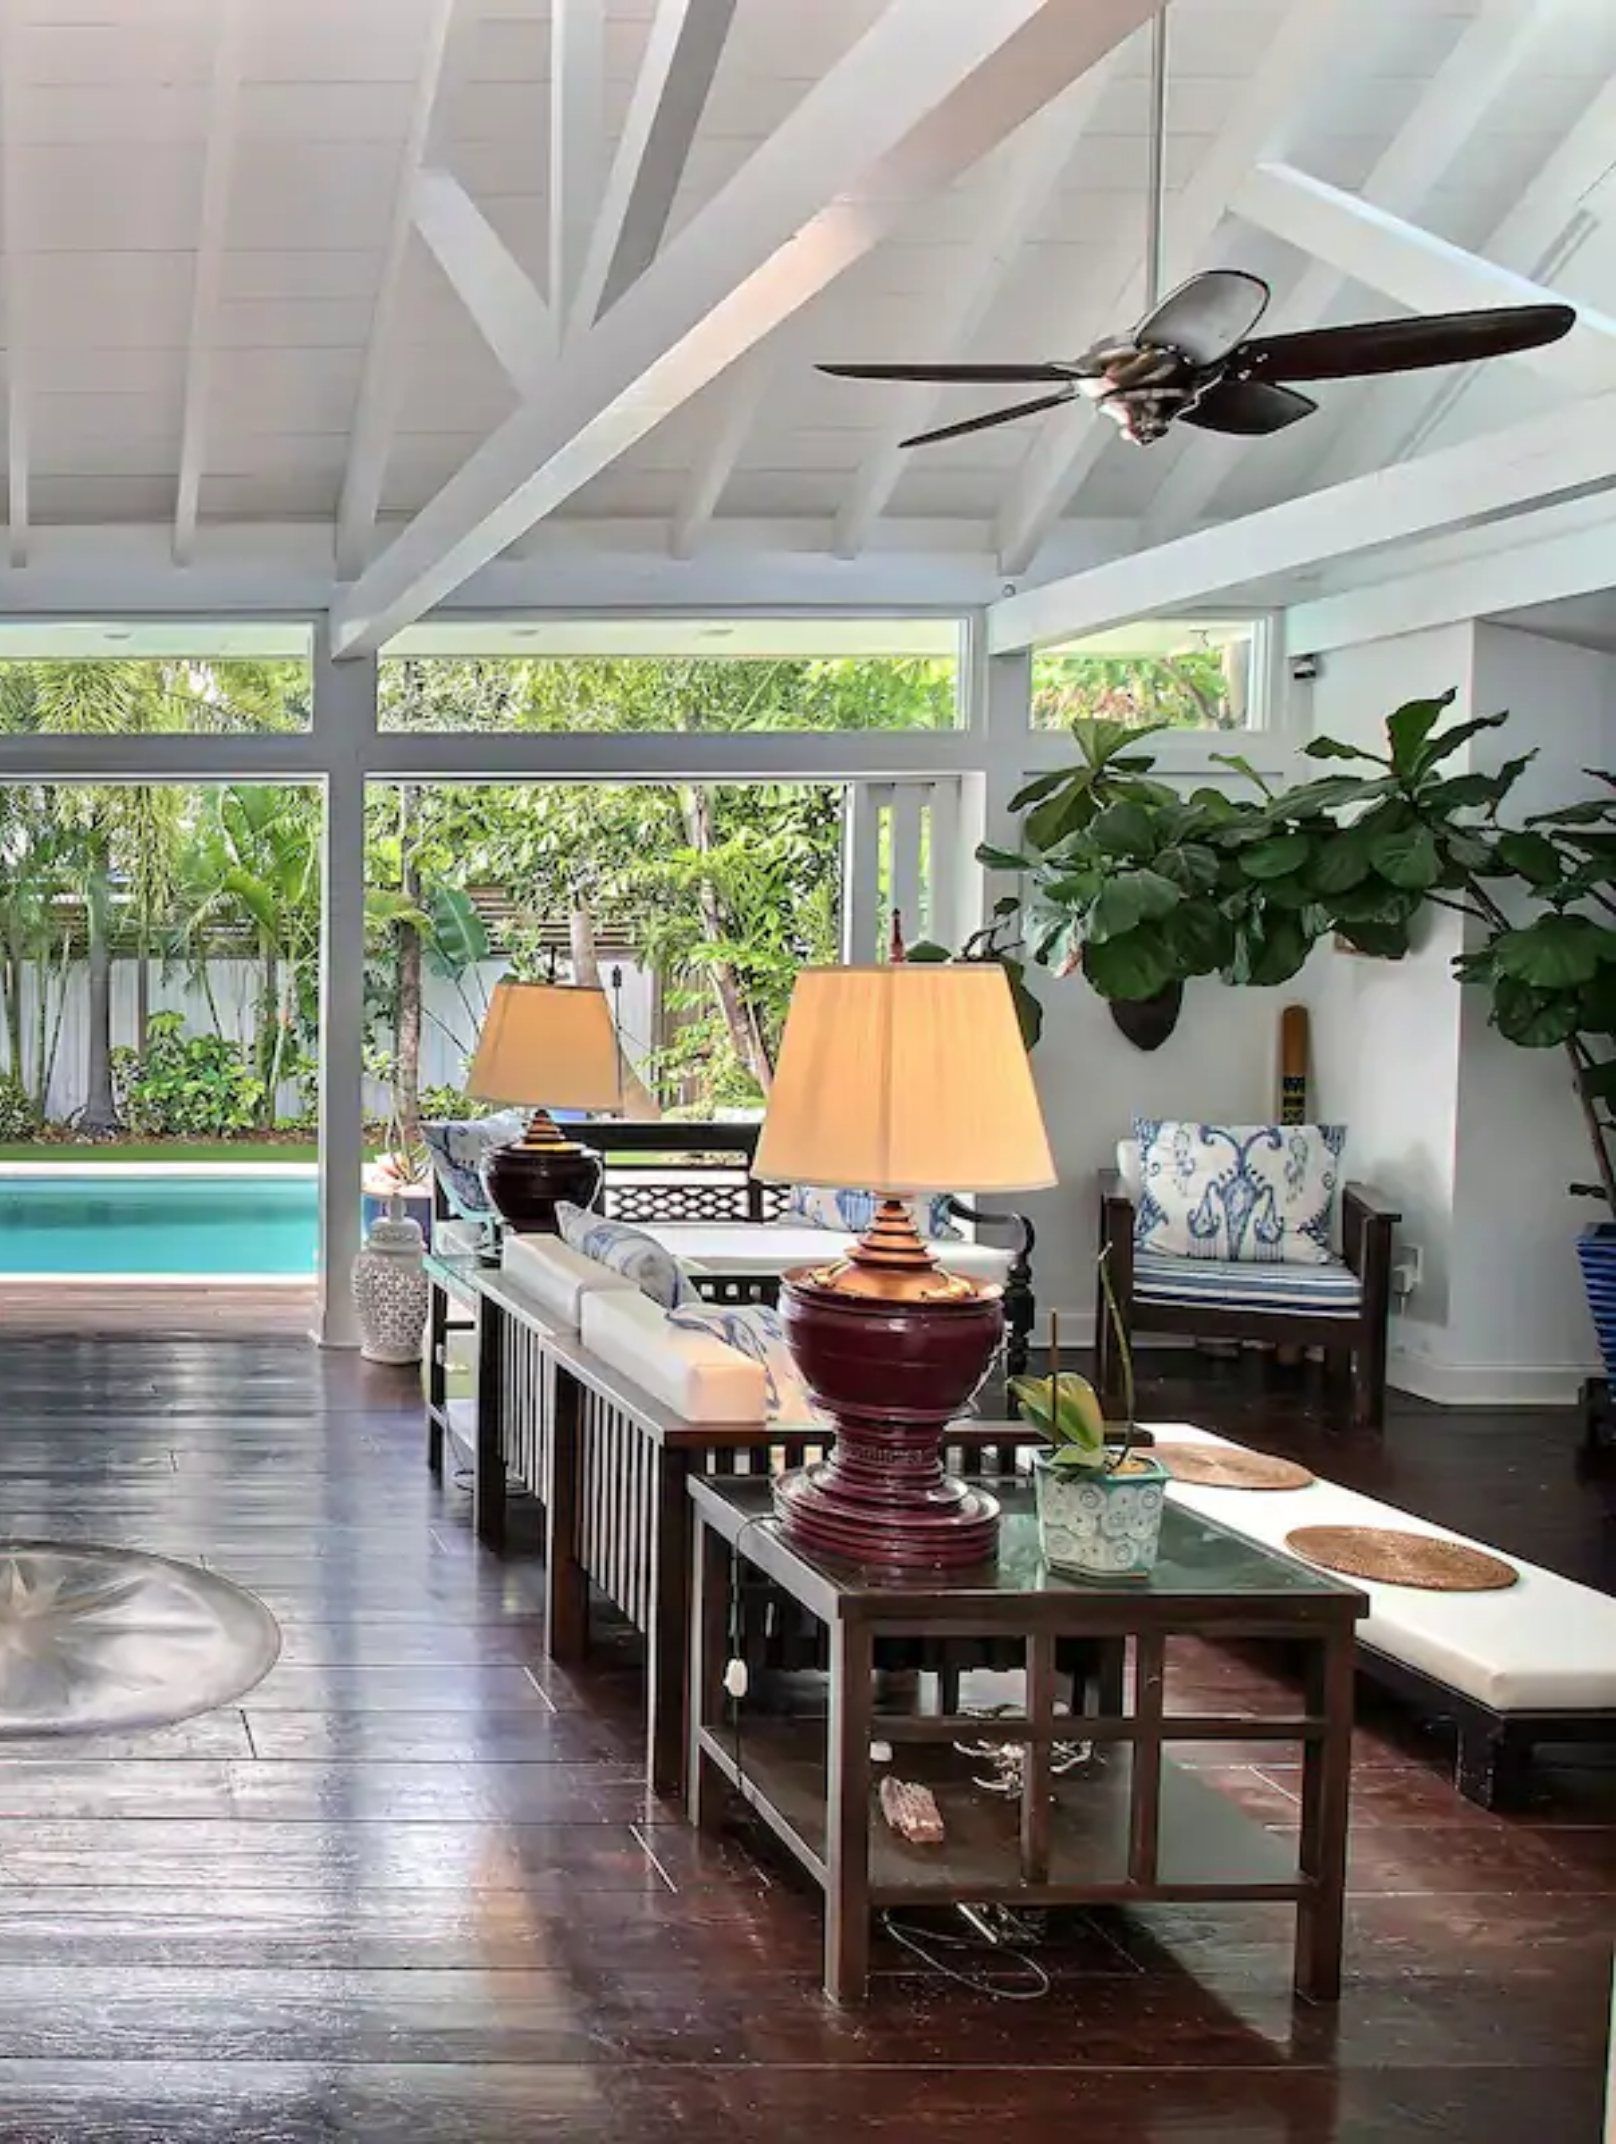 Florida Keys Luxury Vacation Rentals